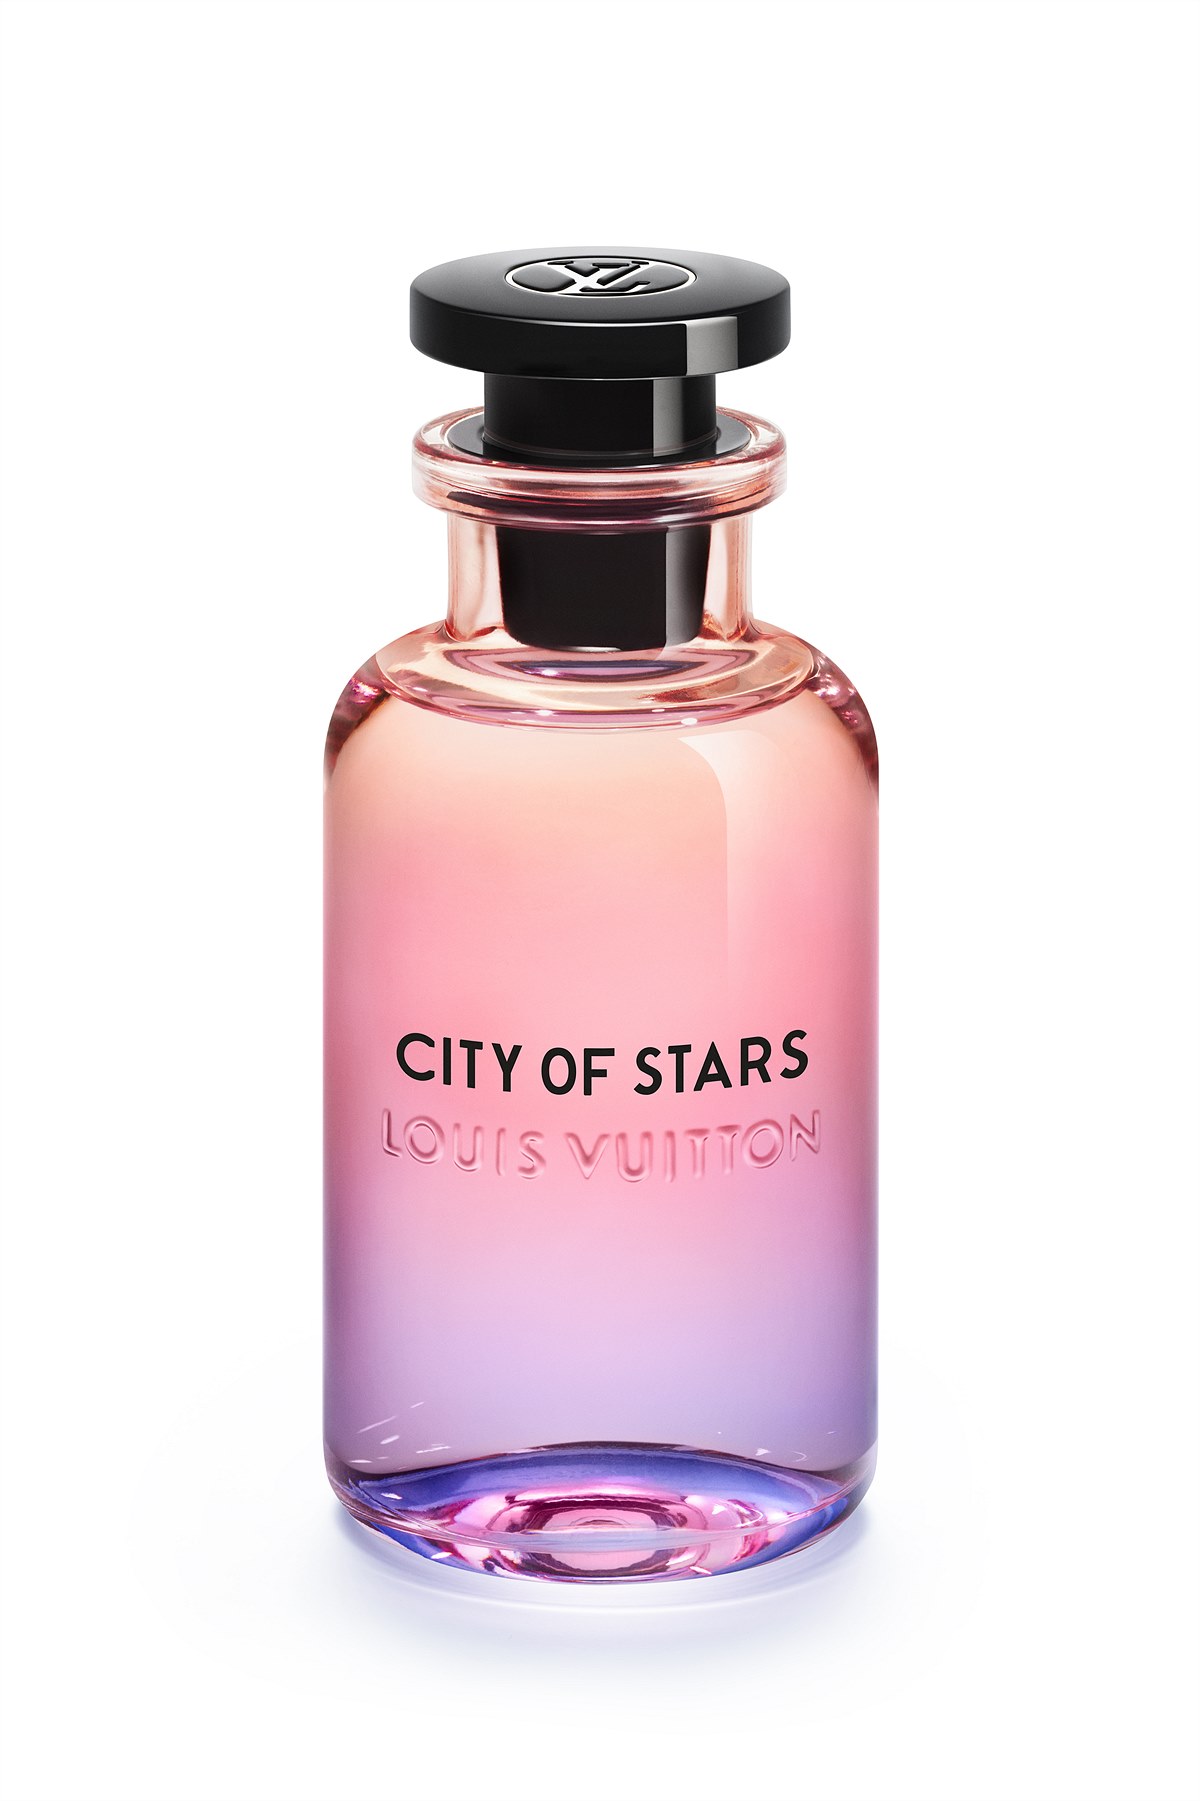 LV_CITY OF STARS (1)